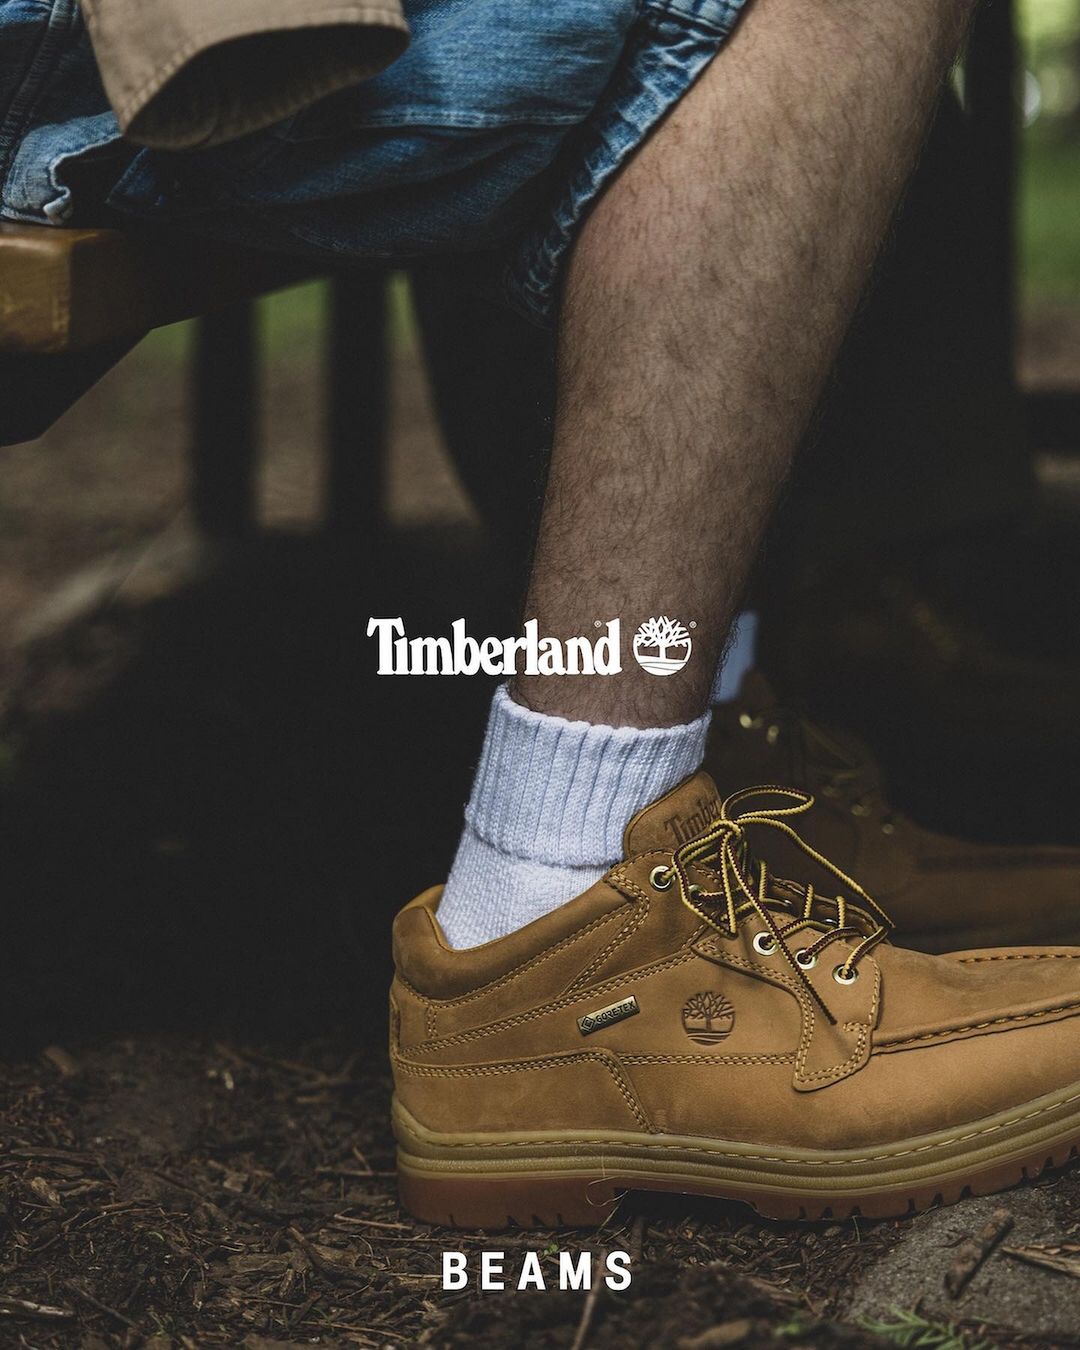 BEAMS x Timberland 合作鞋款来袭– NOWRE现客